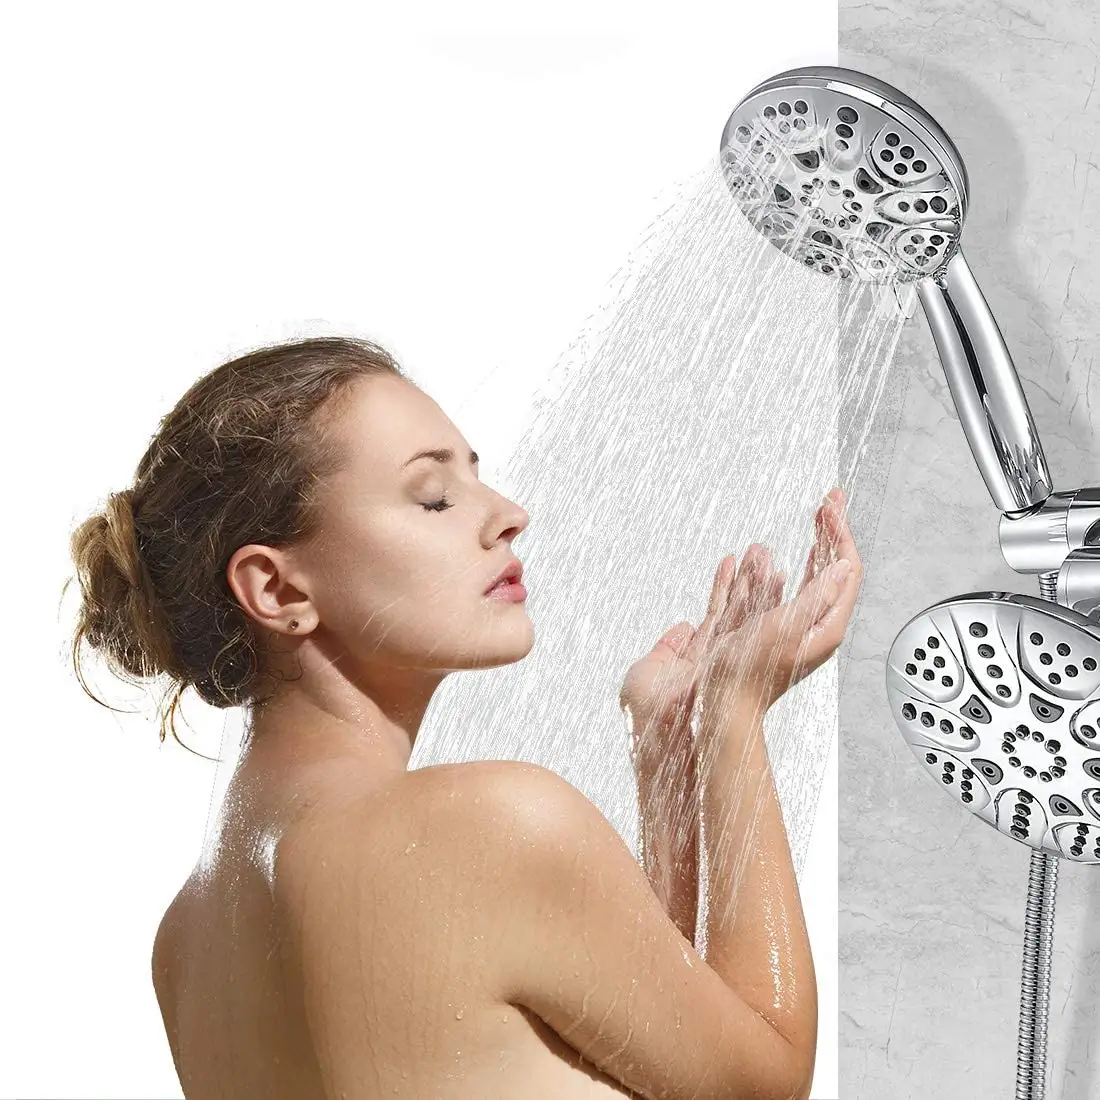 Amazn Jual Panas CUPC 6 Fungsi ABS Spa Hand Showerhead dan Rain Shower Combo Ganda 2 In 1 Shower Head System